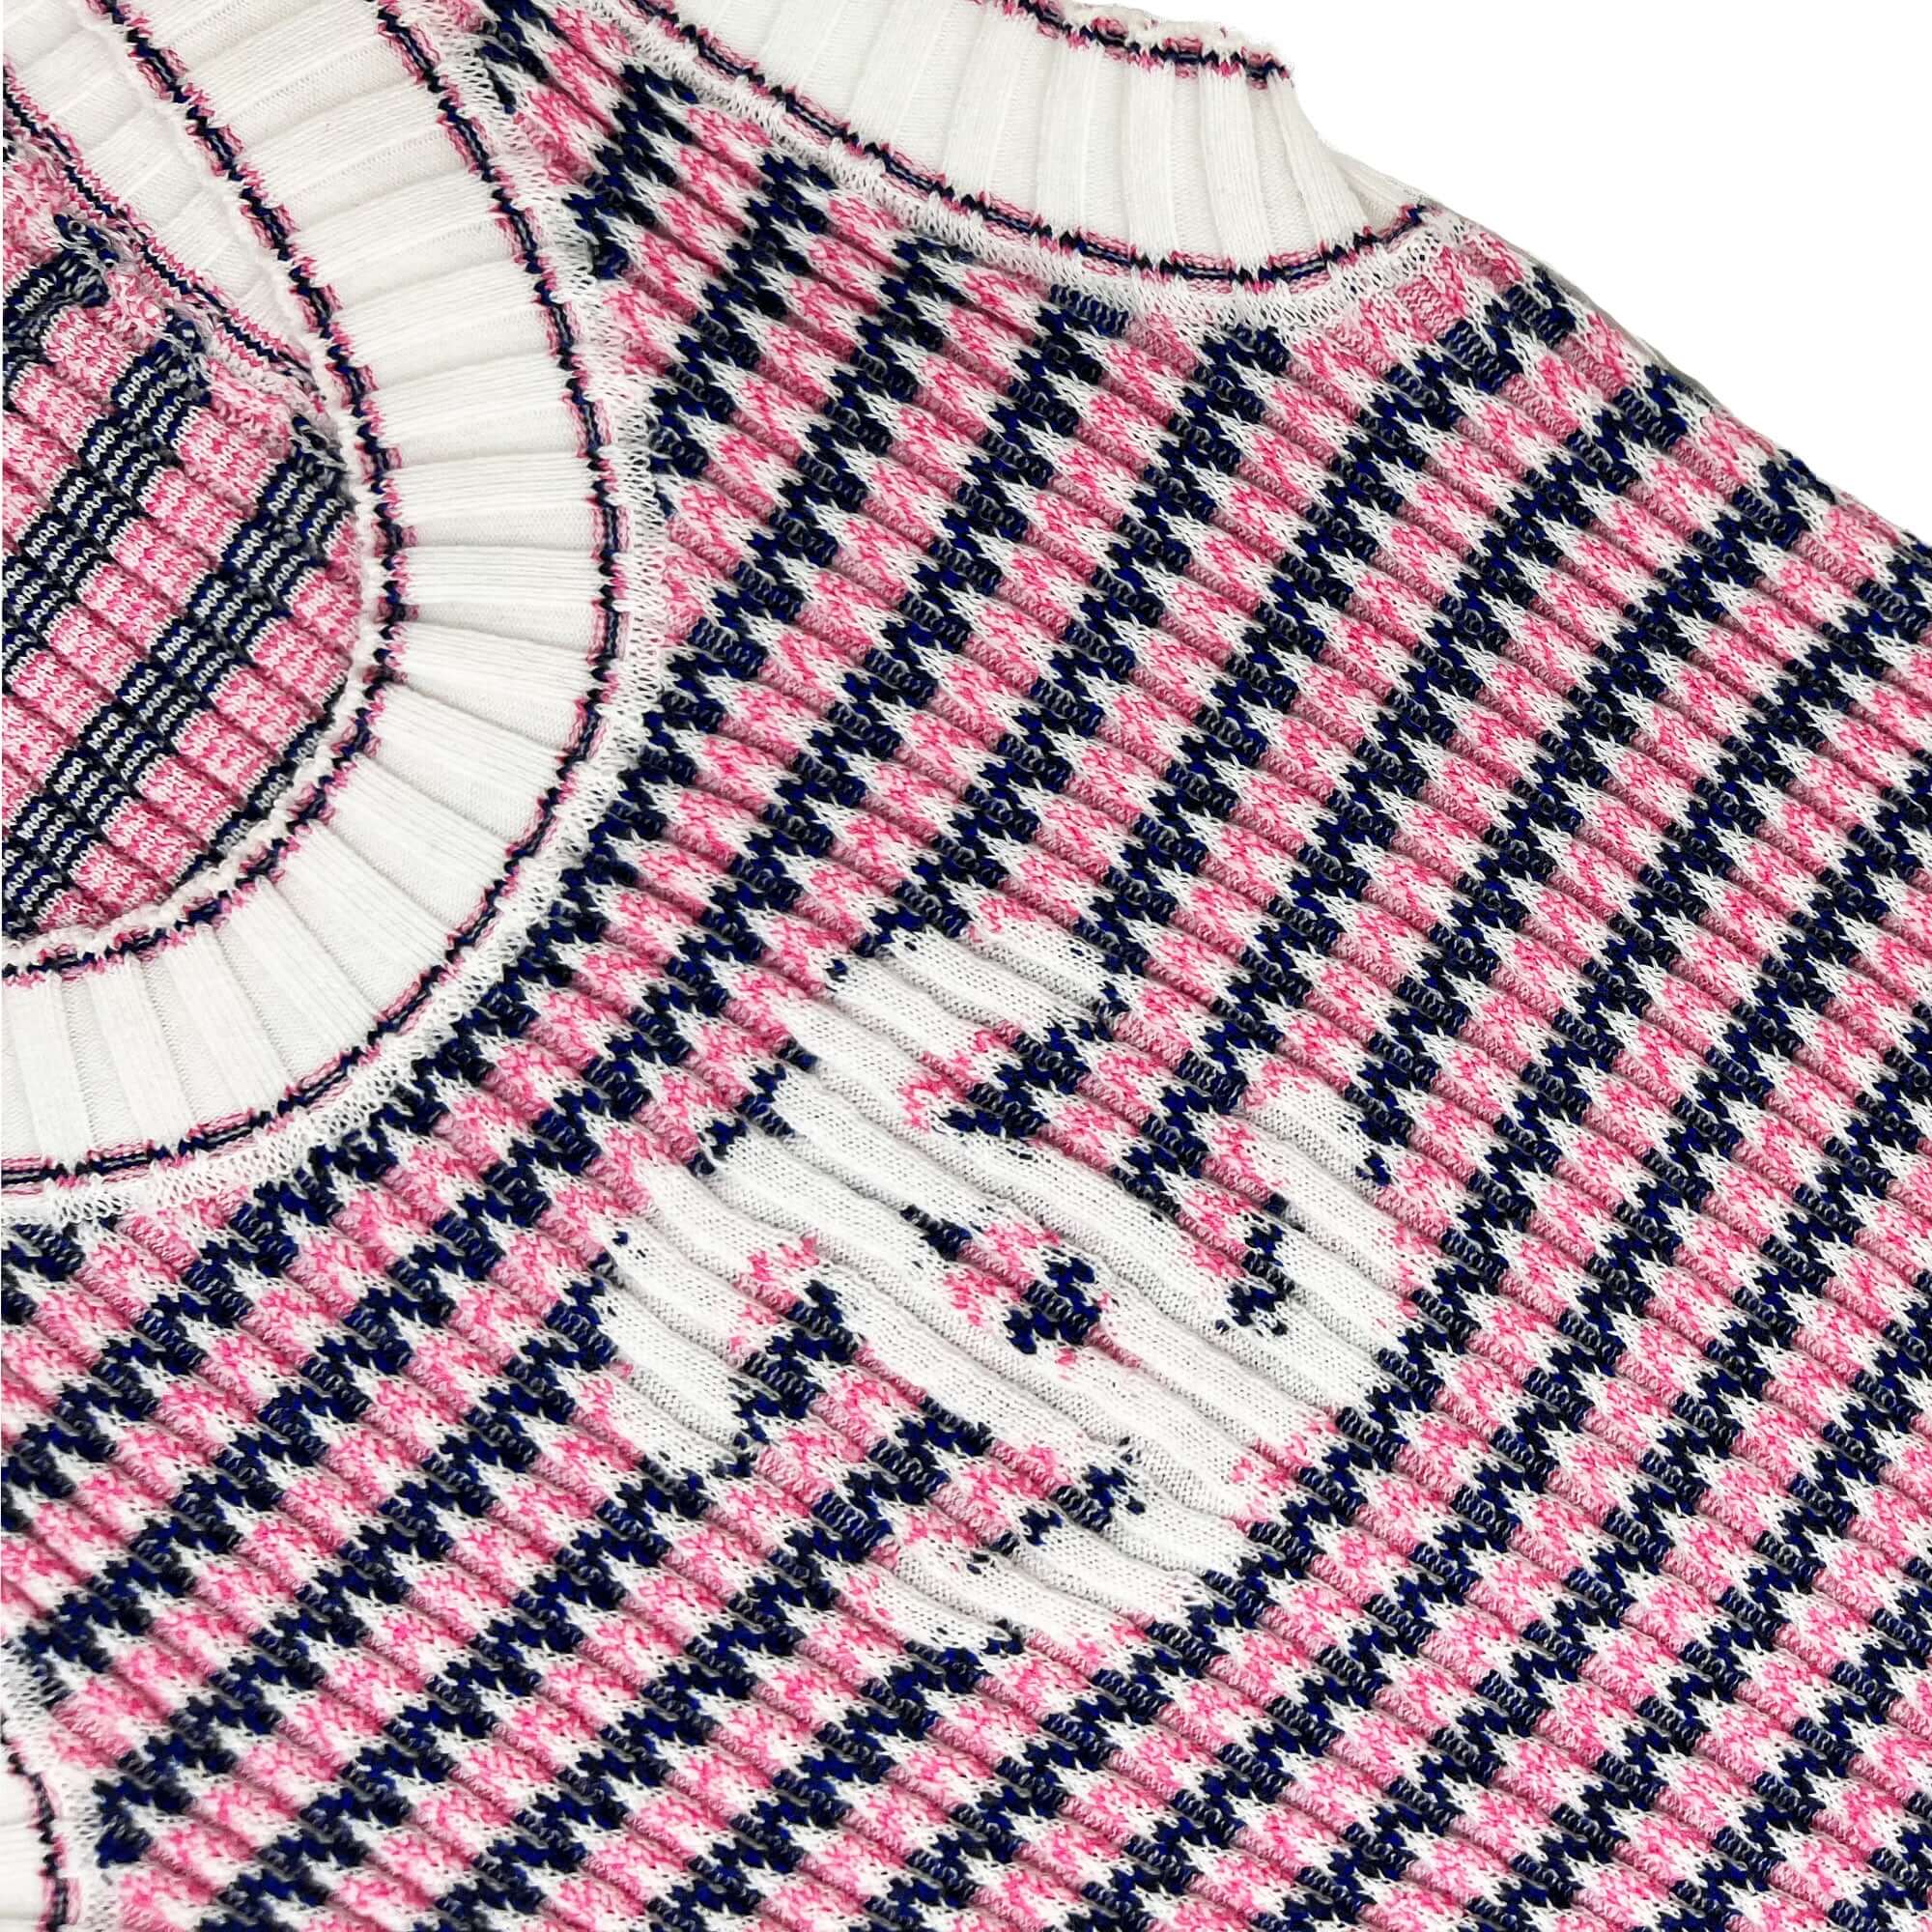 Chanel knit dress